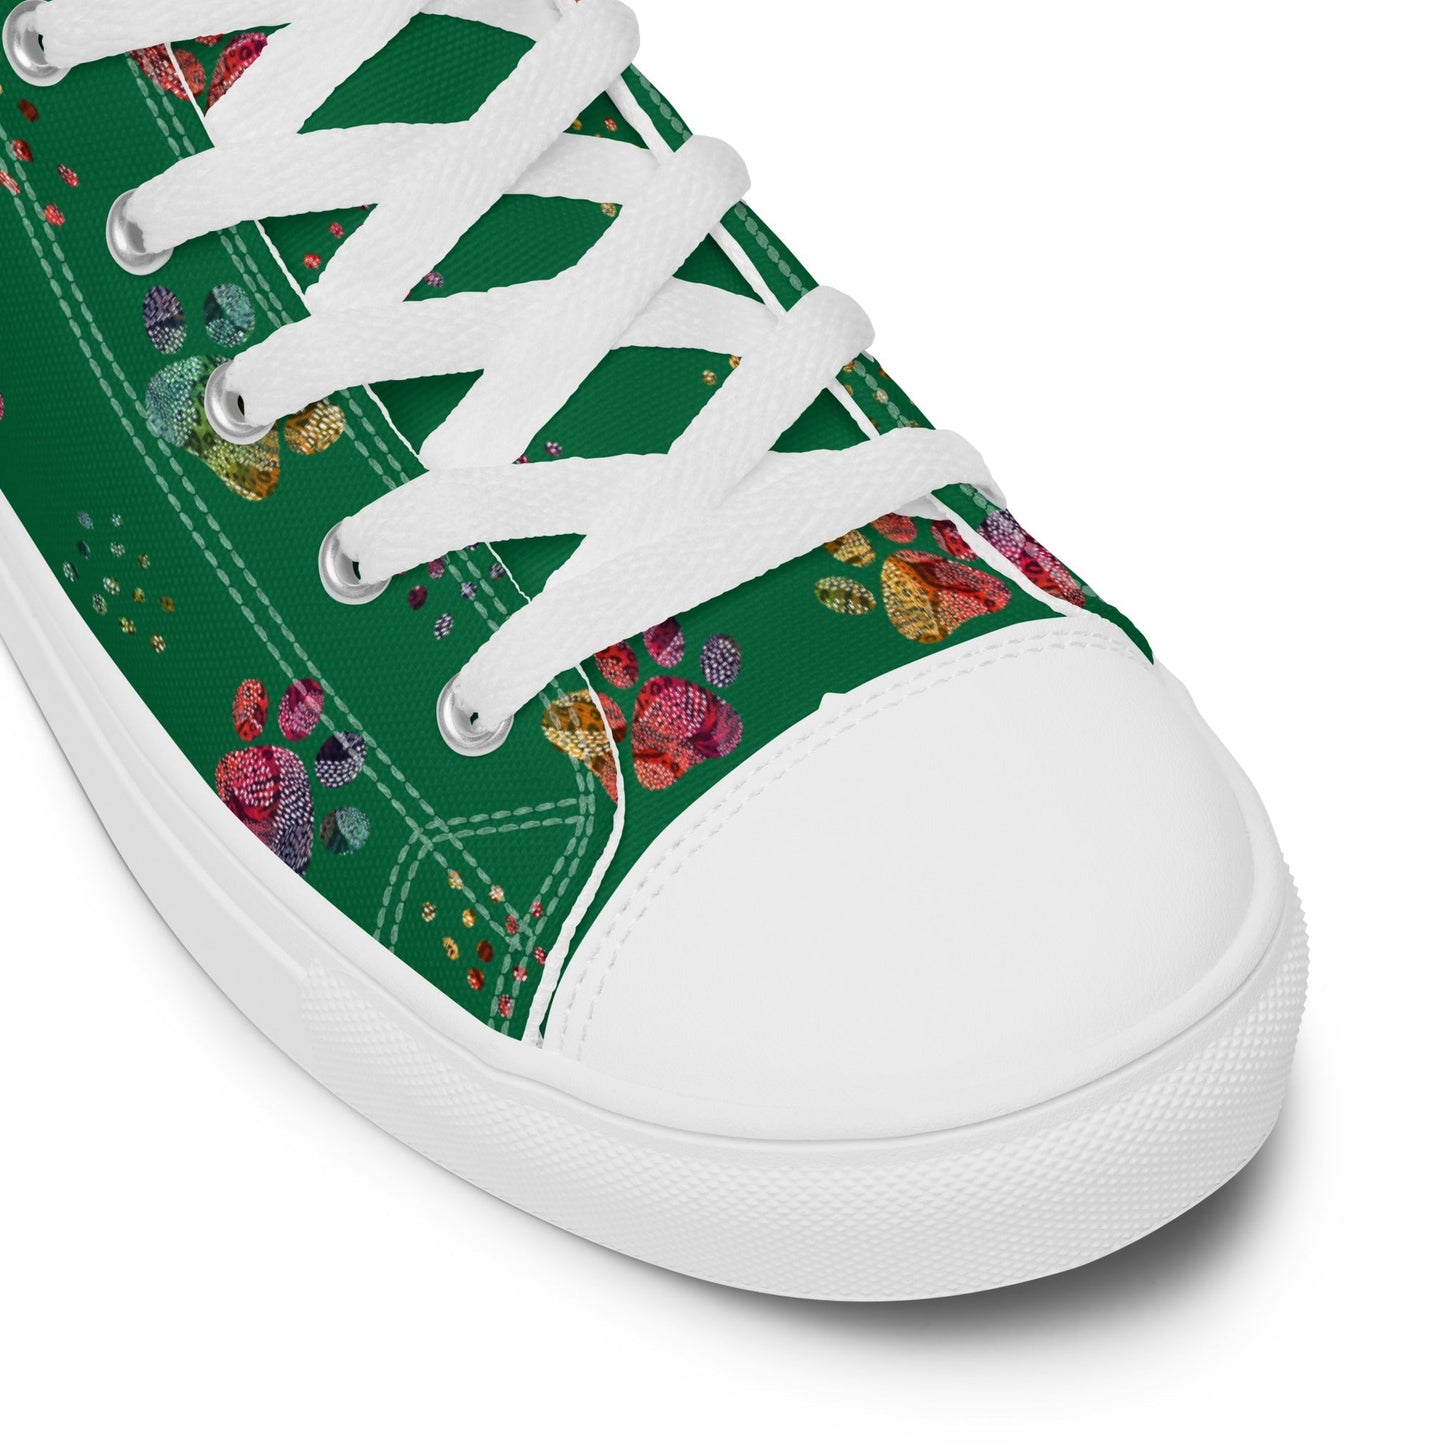 Women's Dark Green Paw Prints Sneakers - DoggyLoveandMore